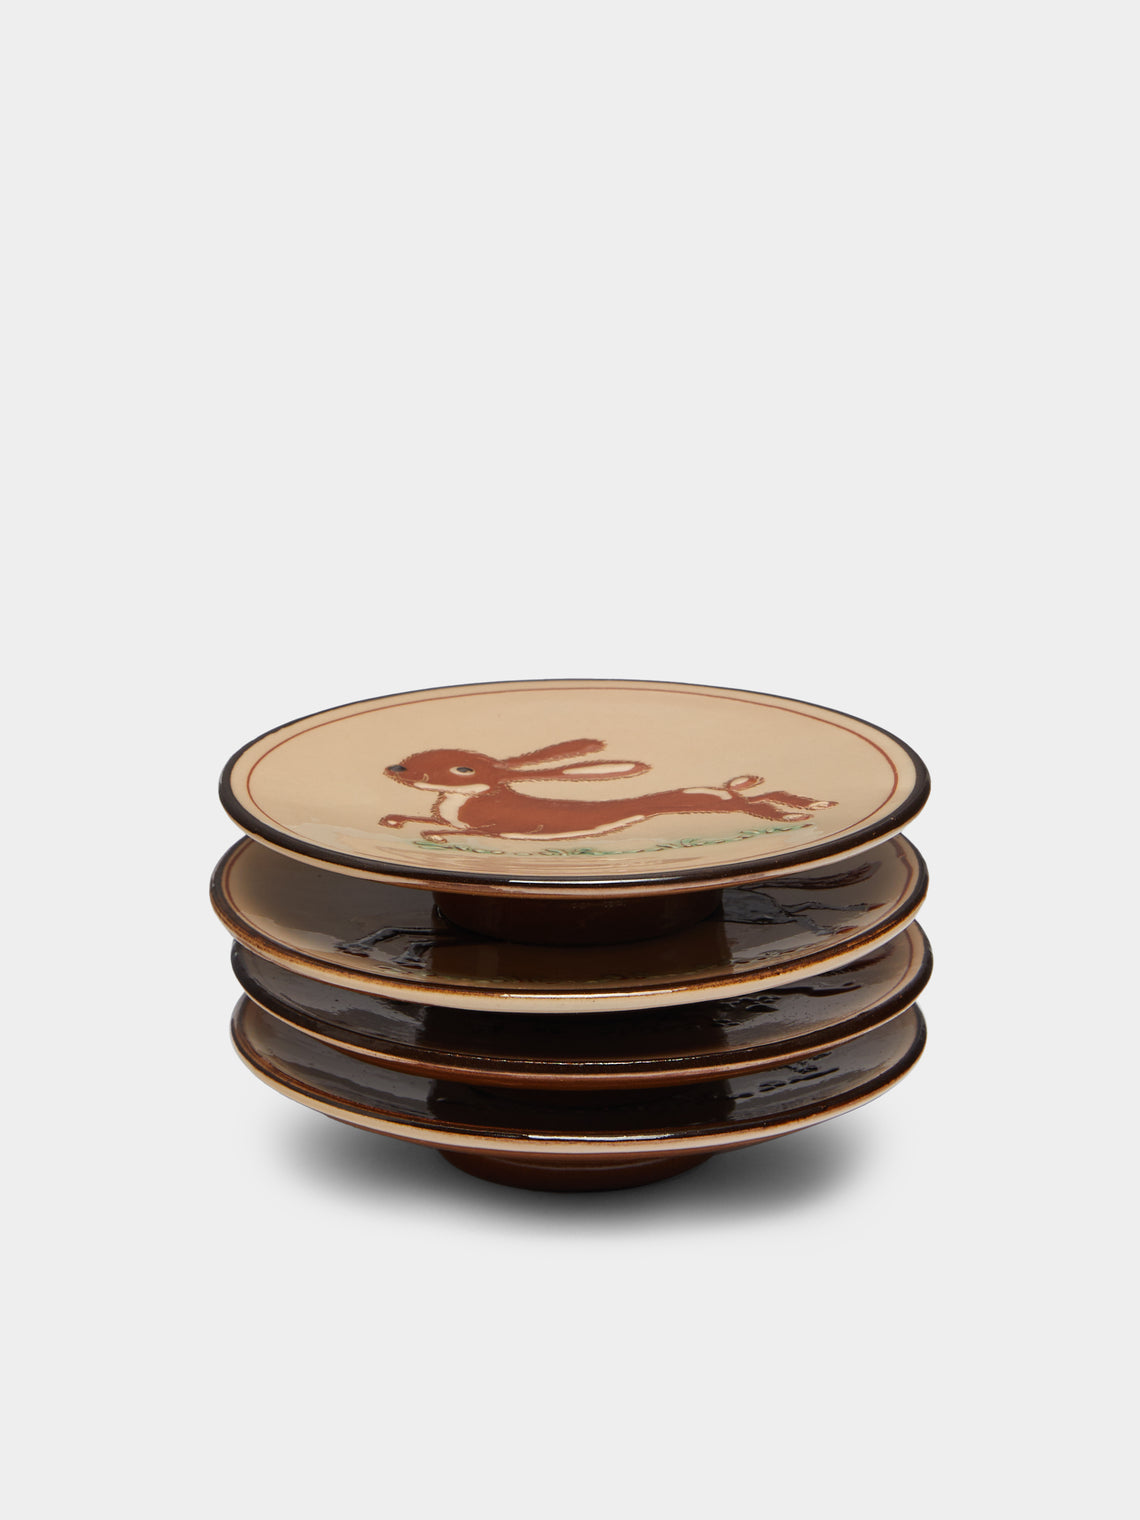 Poterie d’Évires - Animals Hand-Painted Ceramic Dessert Plates (Set of 4) -  - ABASK